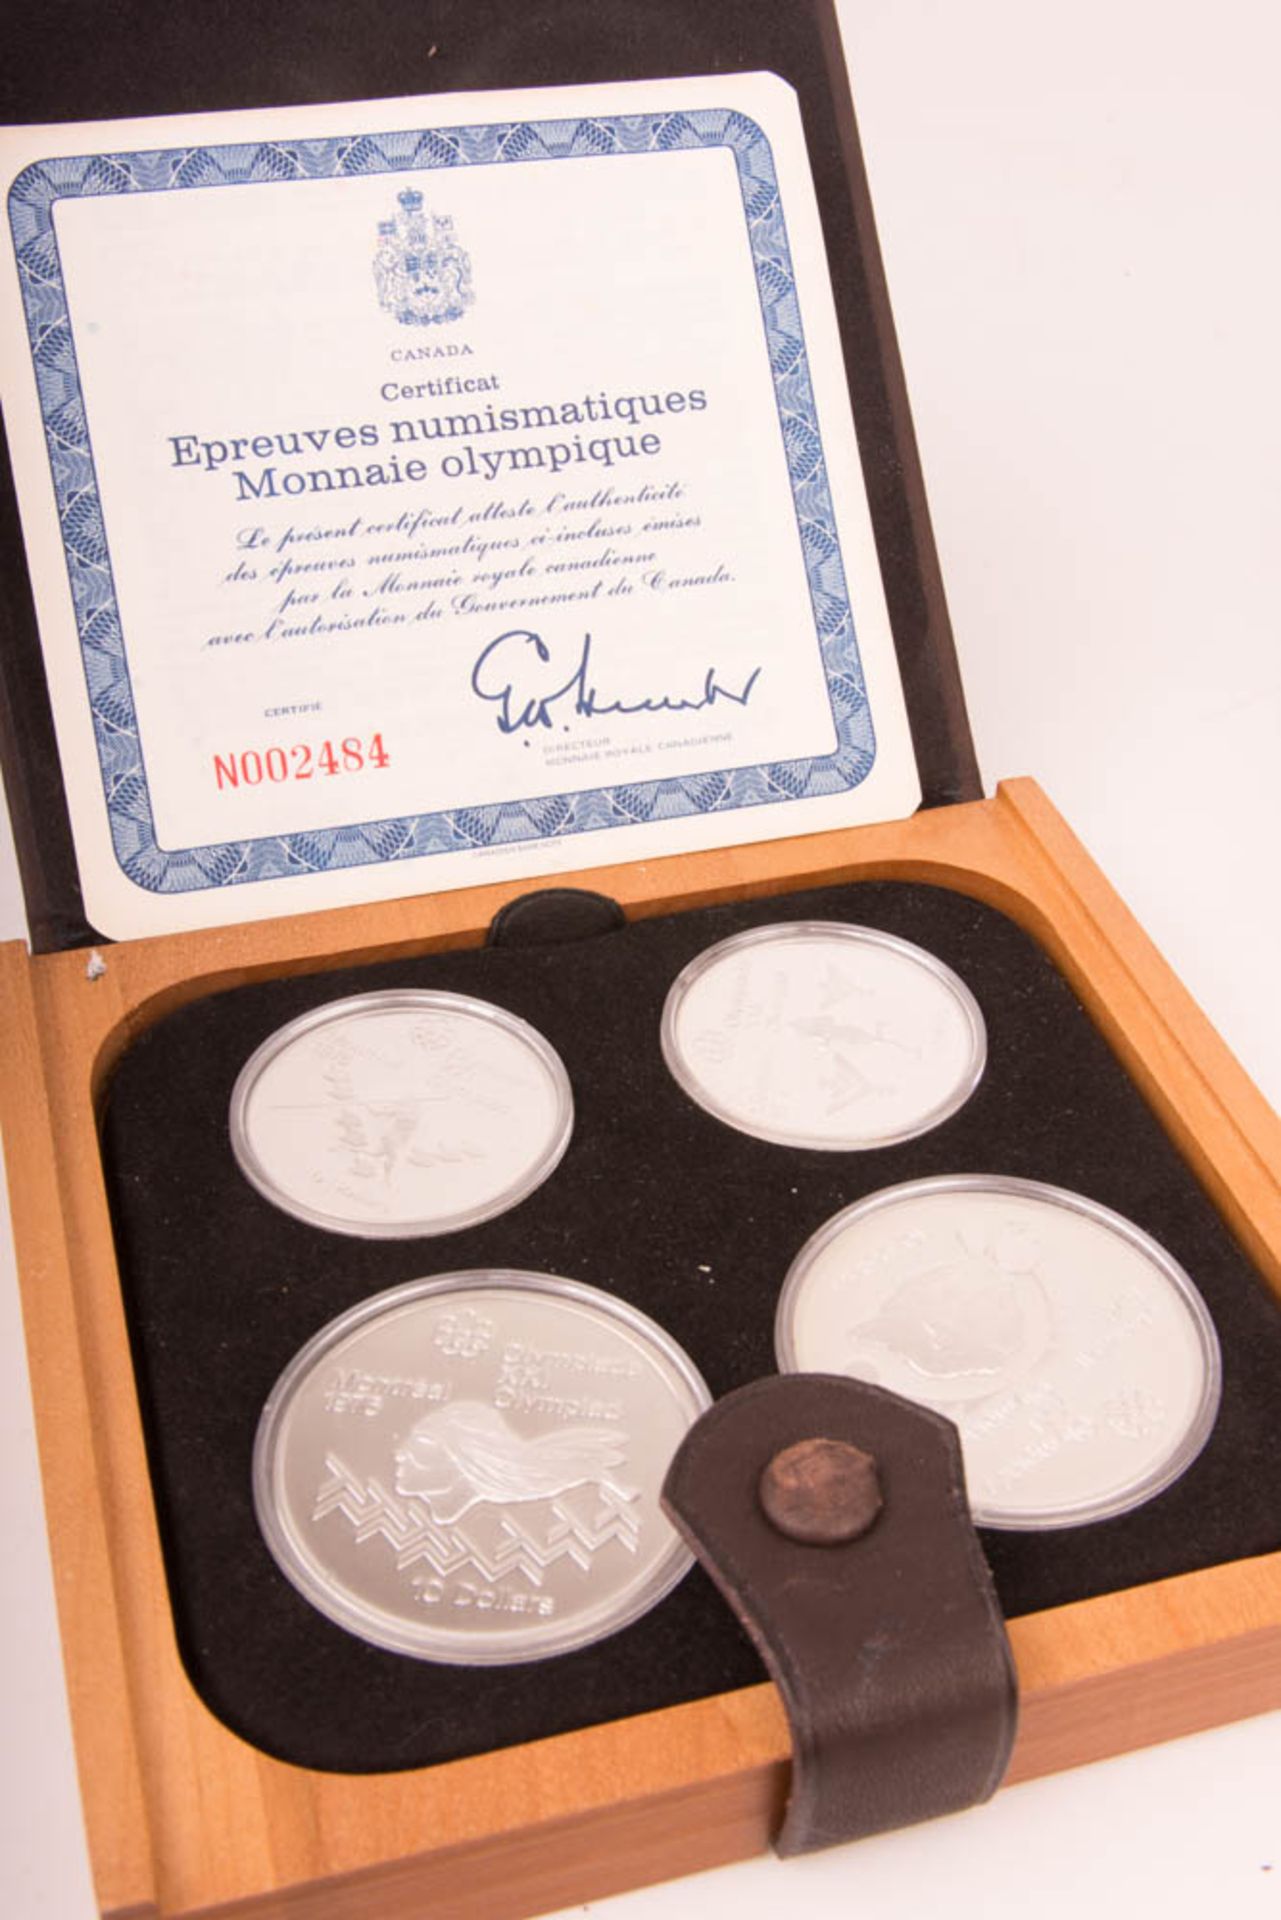 Kanada: 4x Silberset Gedenkmünzen Olympiade 1976. - Bild 3 aus 7